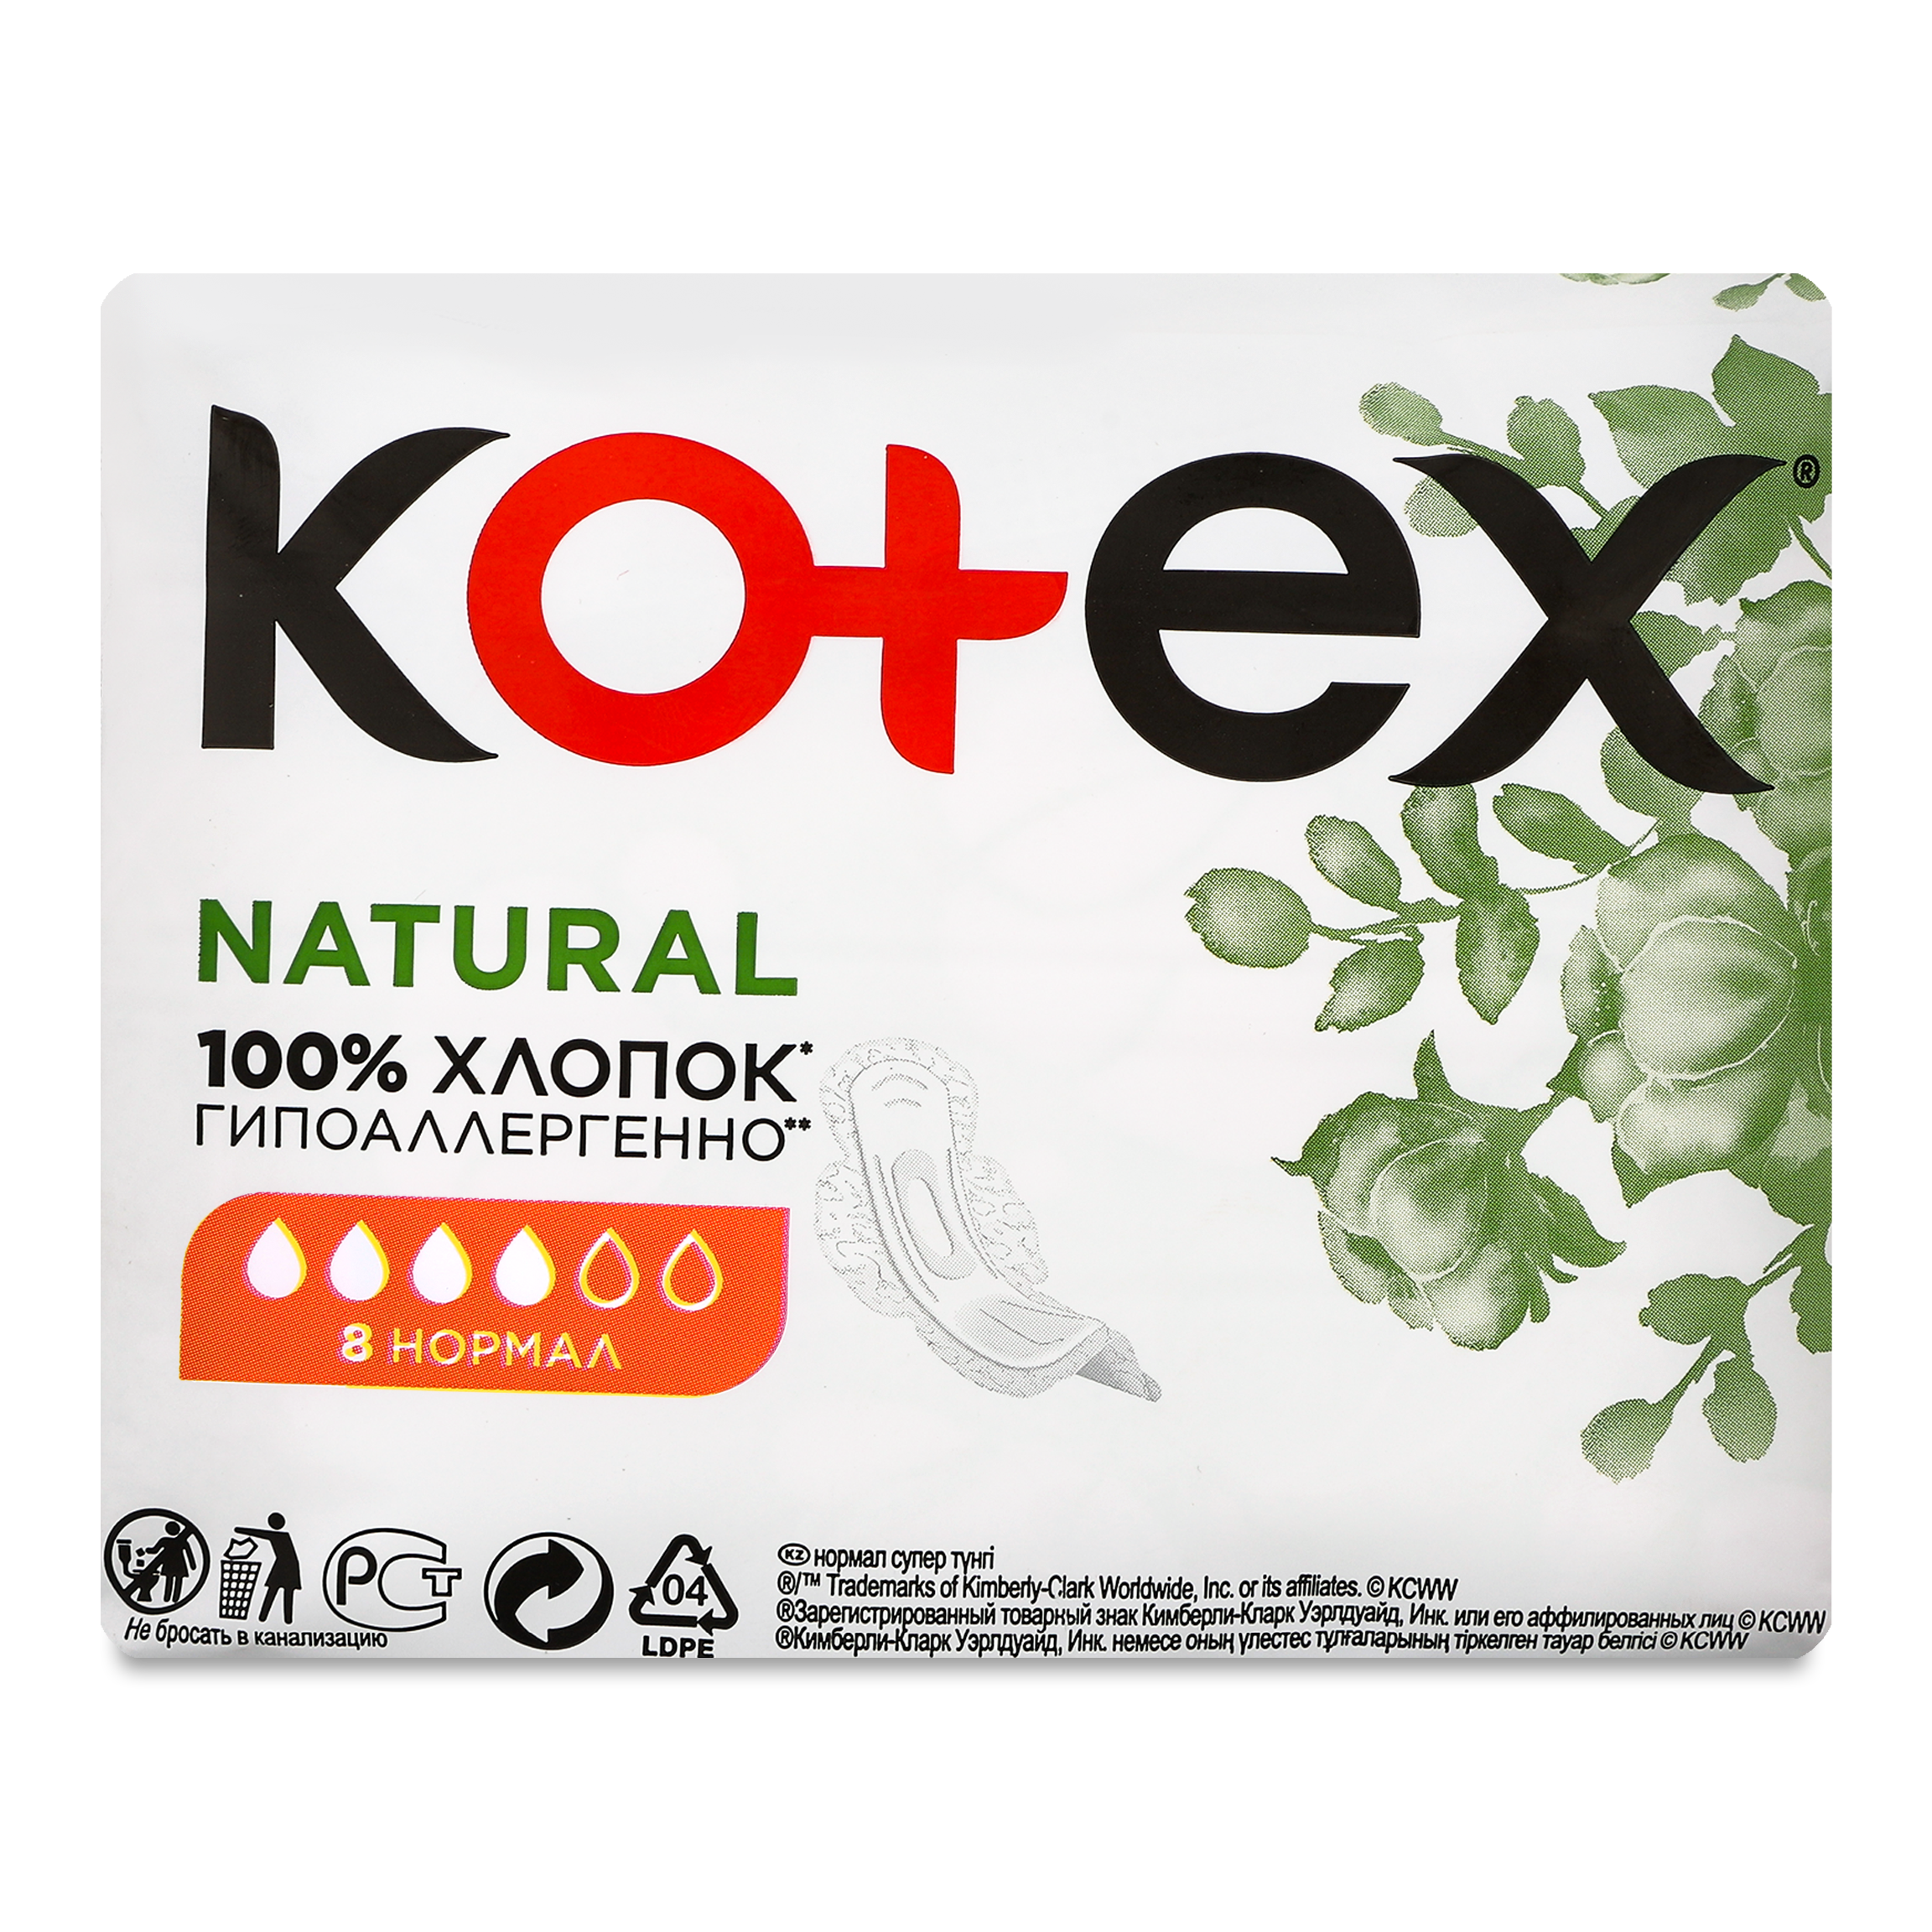 Прокладки Kotex Natural 4 капли 8шт